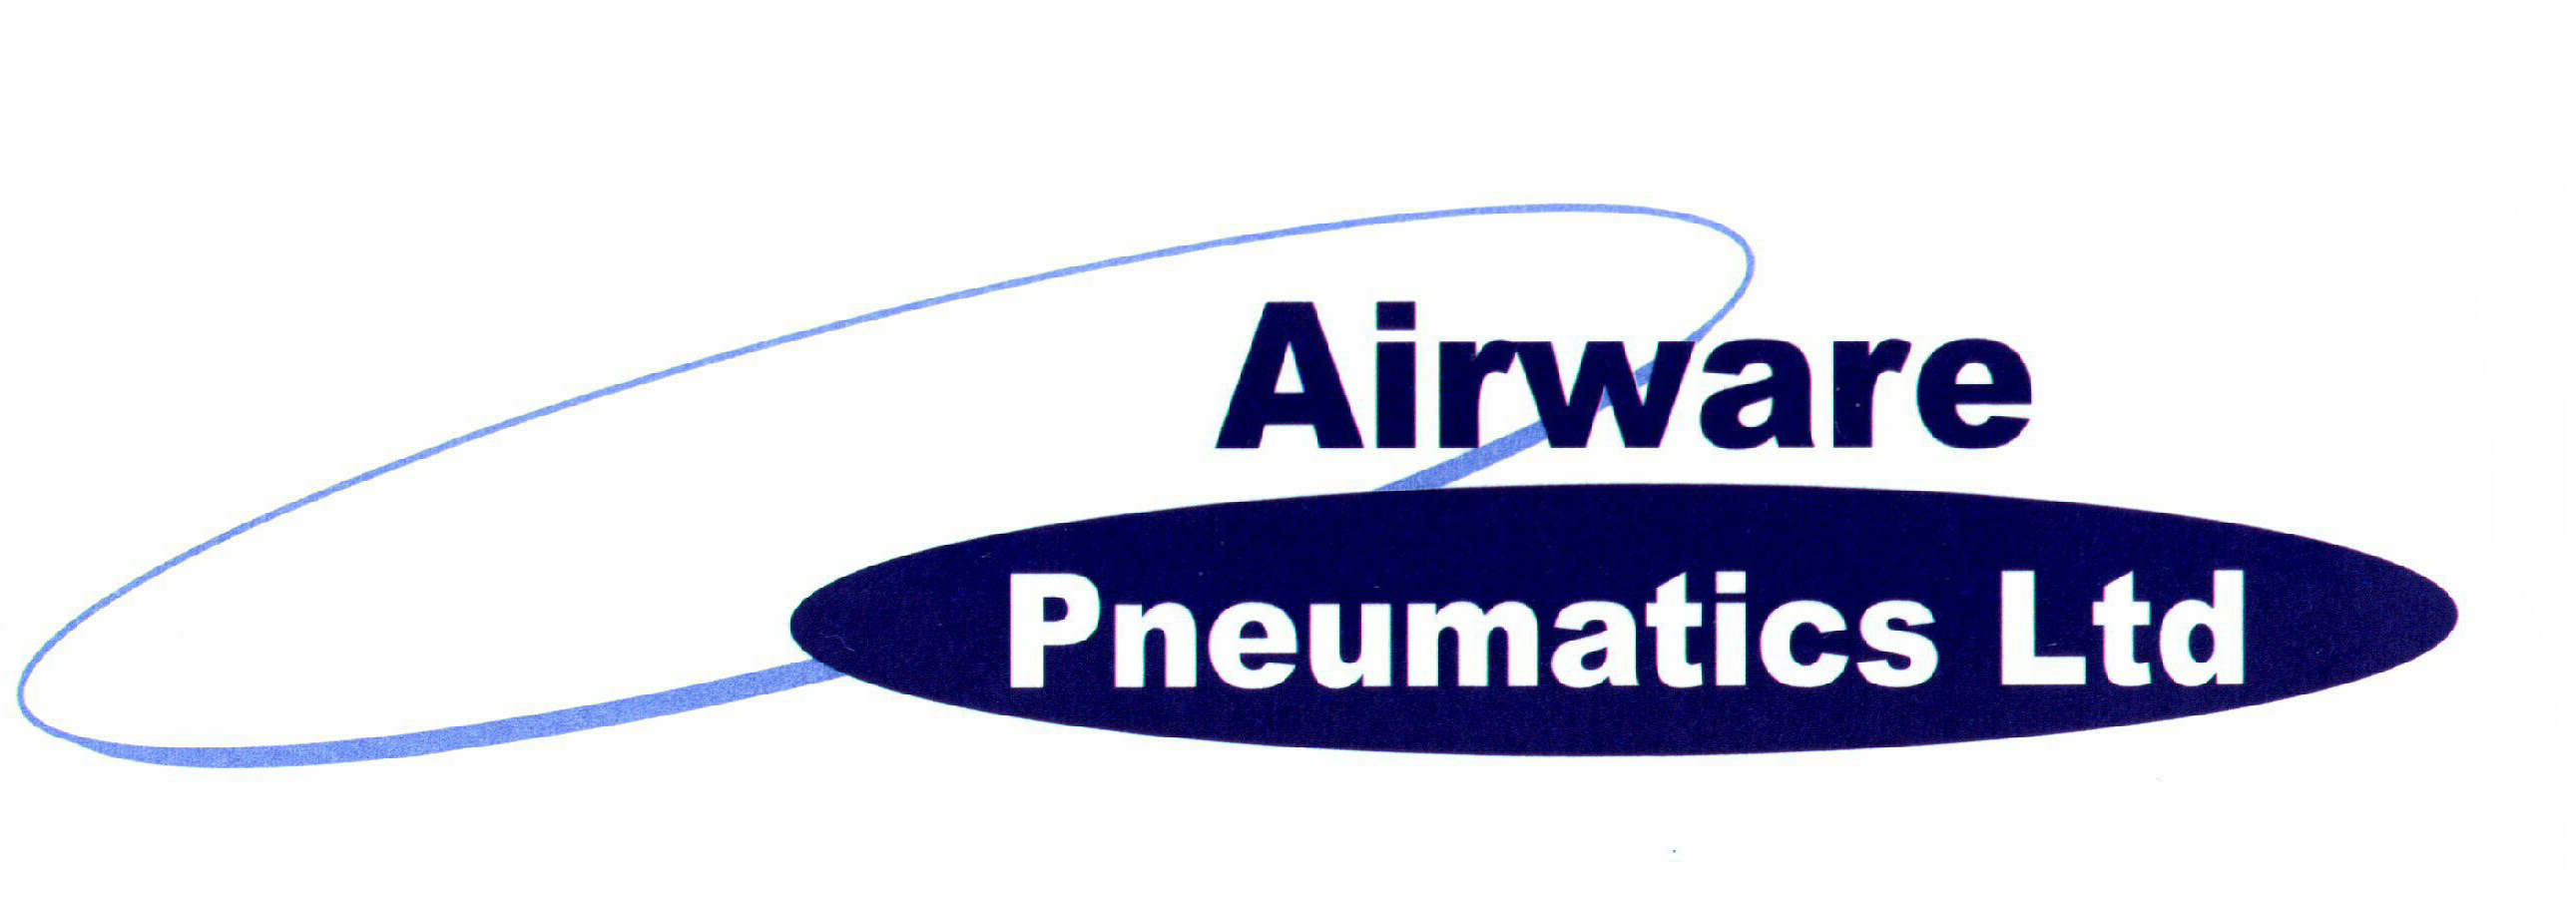 Airware Pneumatics Ltd